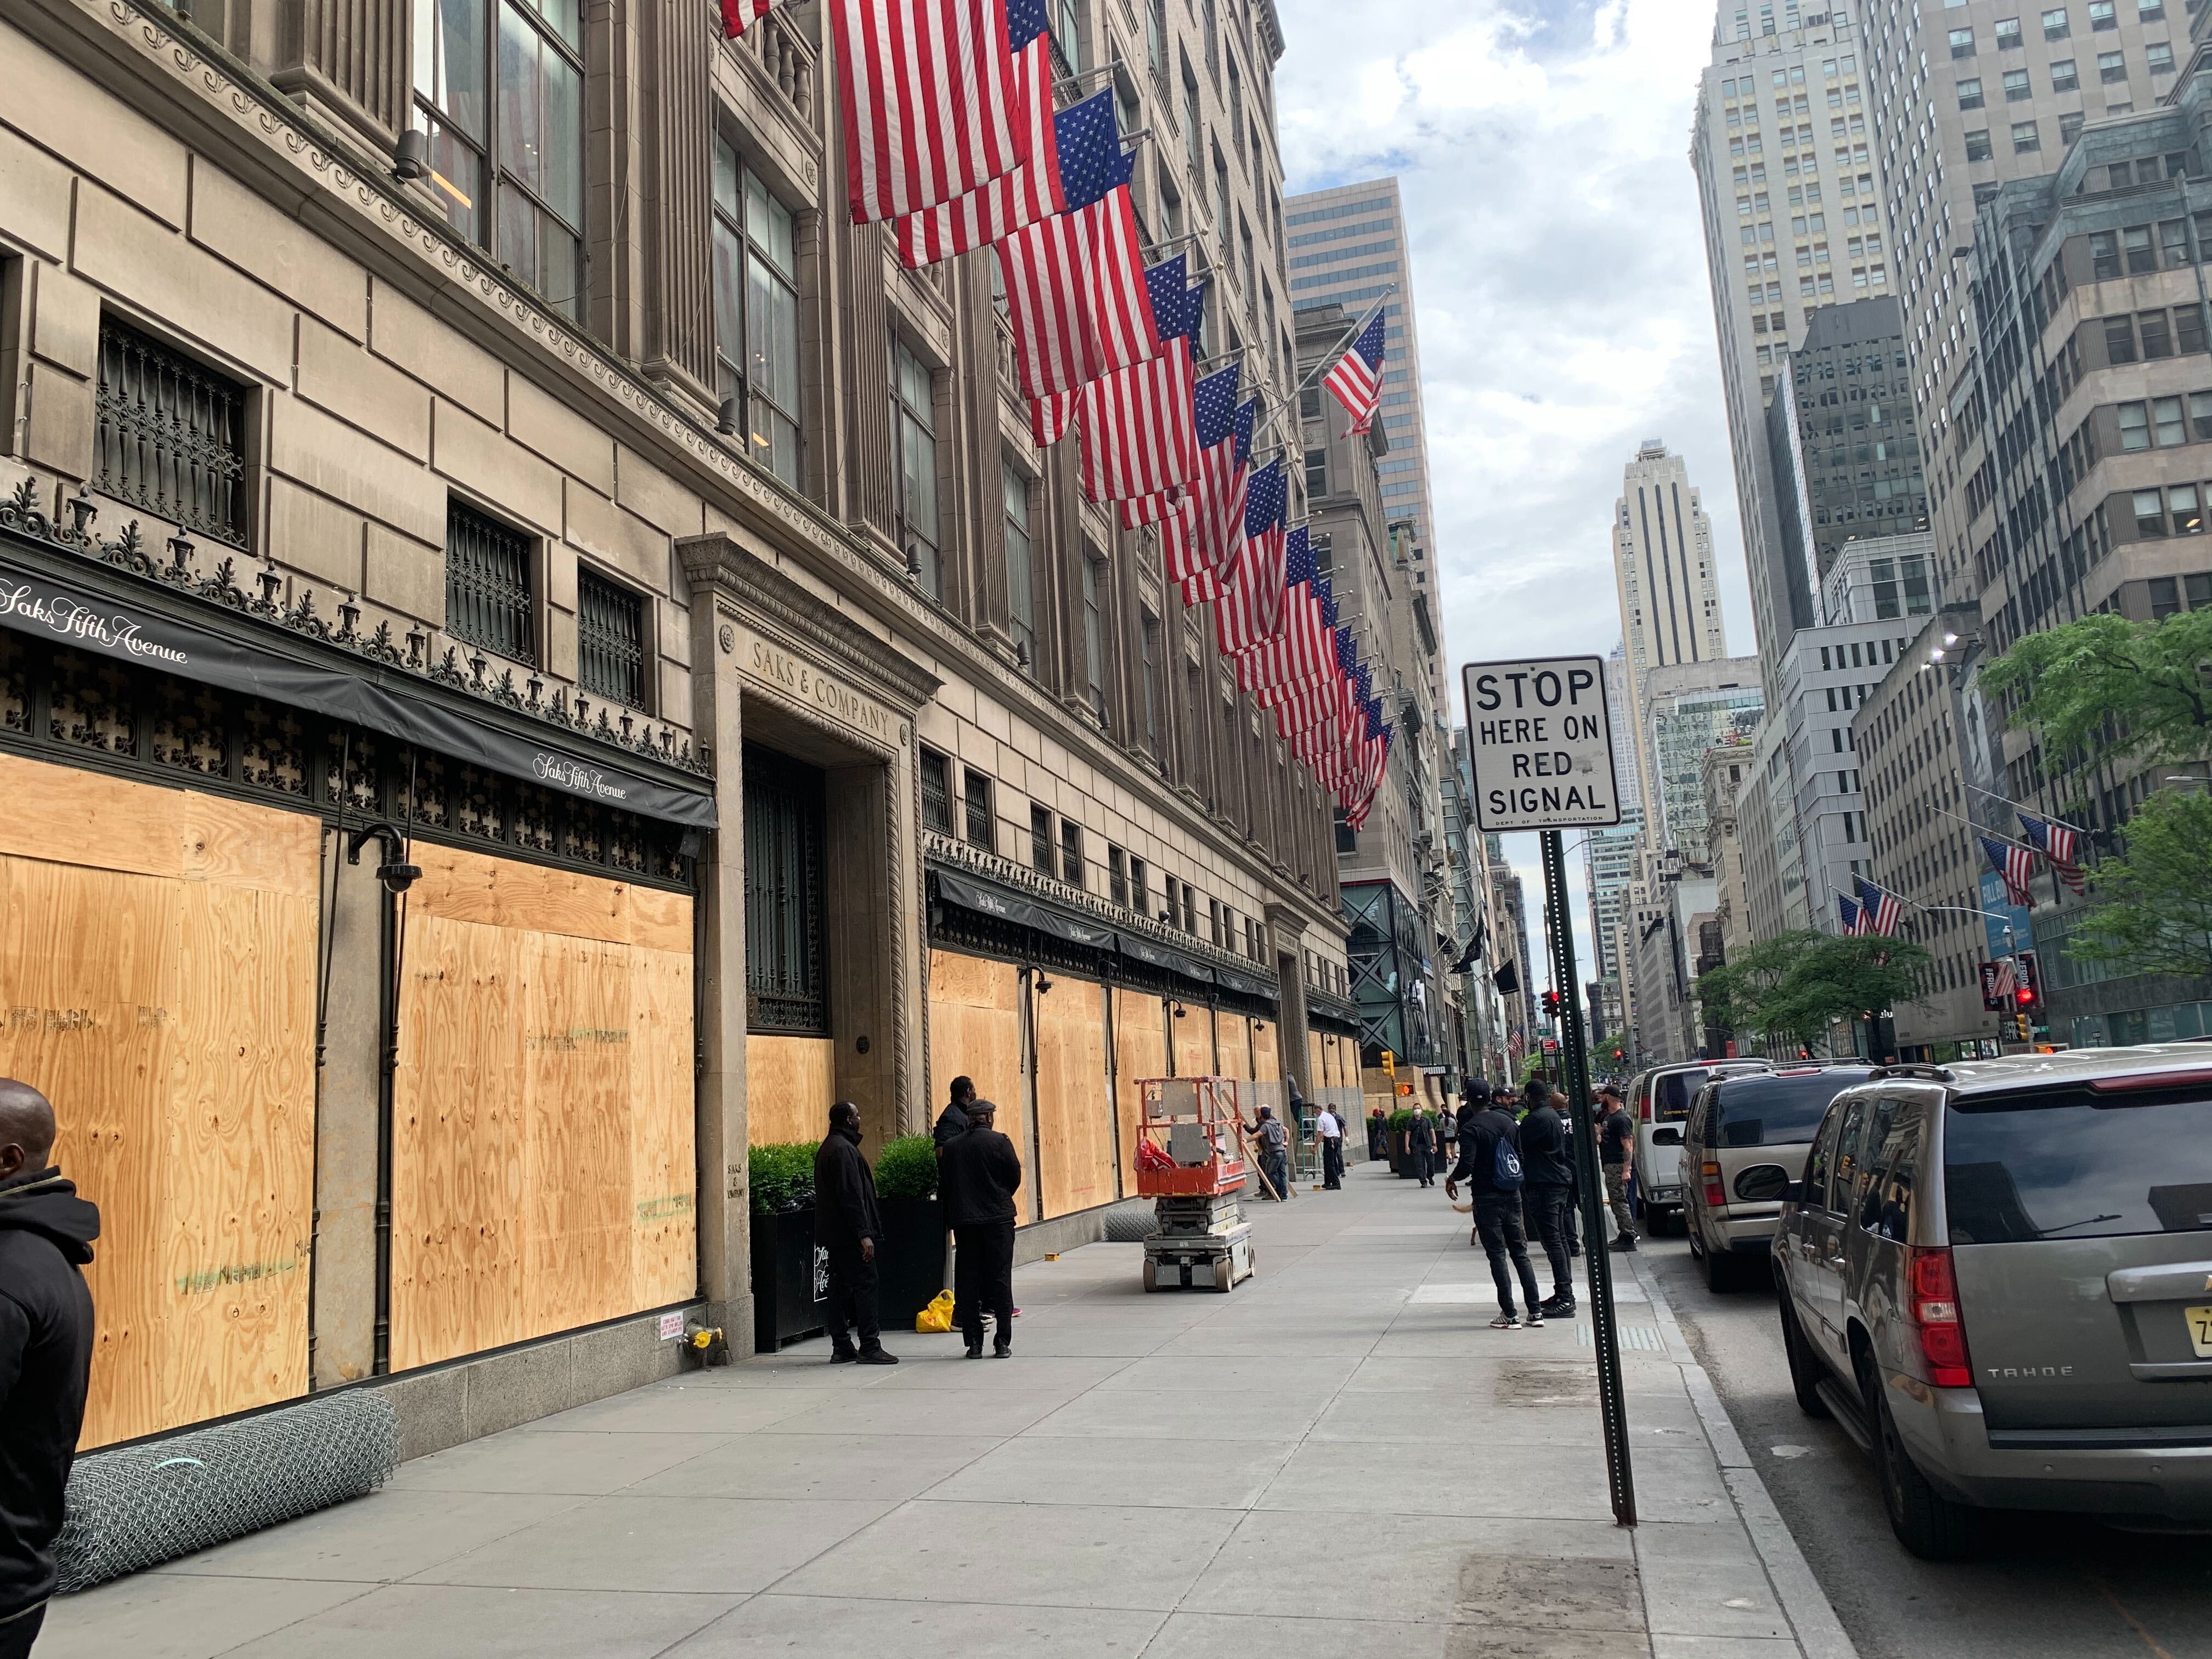 Saks Fifth Avenue opens new Manhattan store in bid to win luxury wars